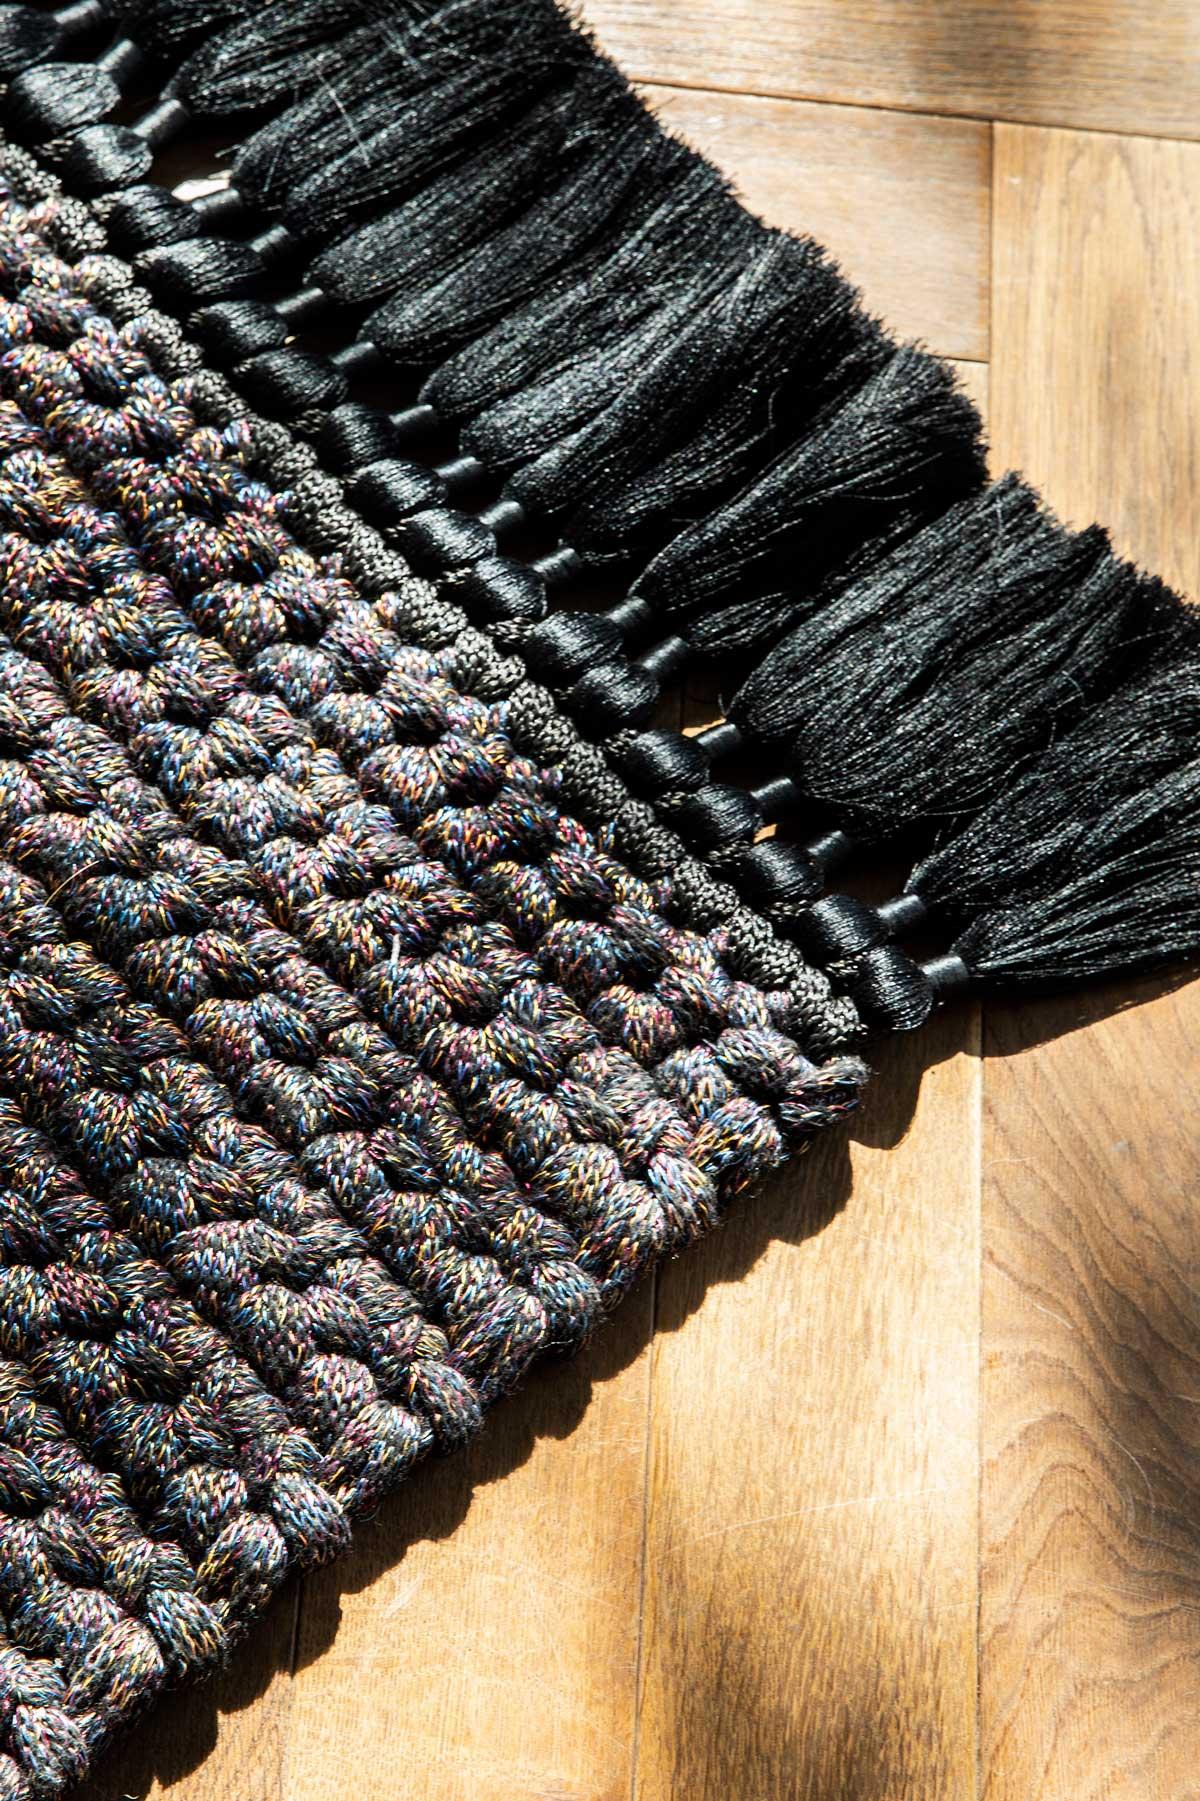 Israeli Thick Rug 120X200 cm  in Black Colorful Rust Handmade Crochet by iota For Sale